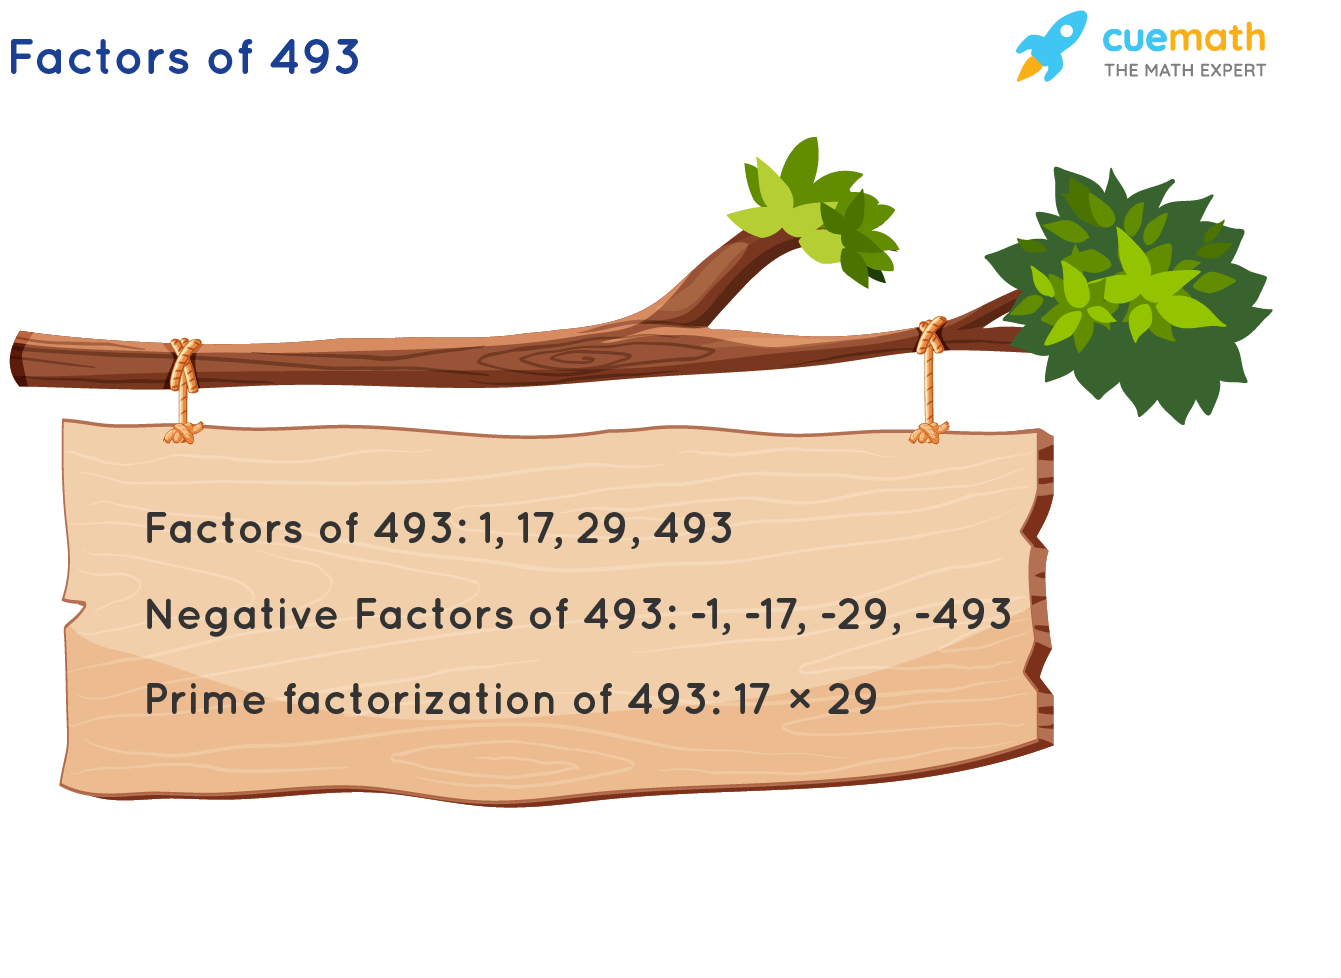 Factors of 493 - Find Prime Factorization/Factors of 493